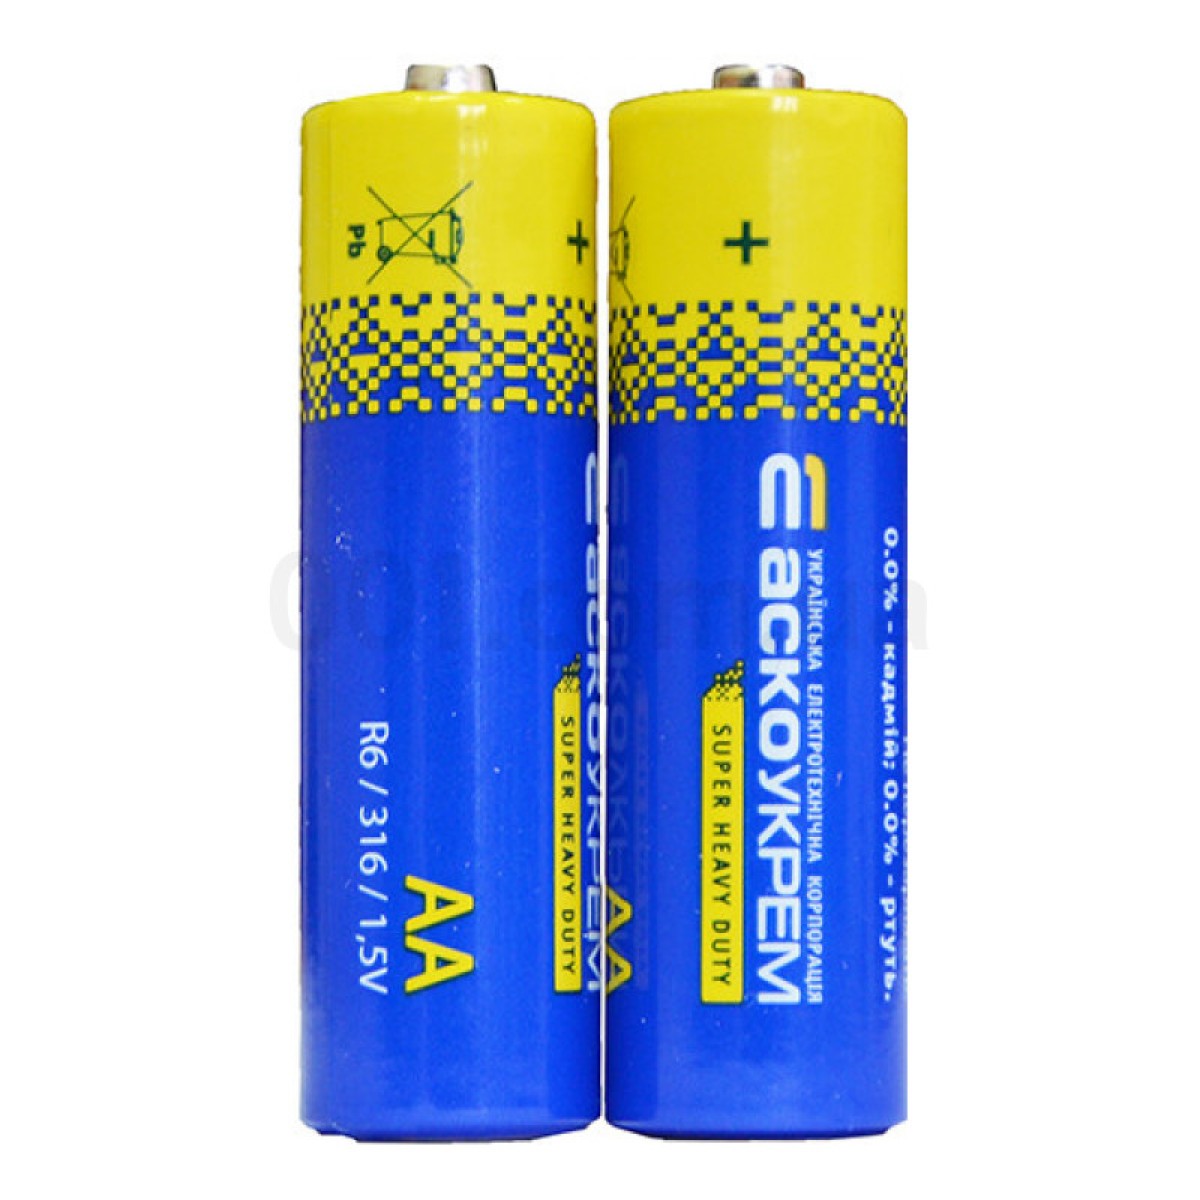 Батарейка солевая АА.R6.SP2, типоразмер AA упаковка shrink 2 шт., АСКО-УКРЕМ 98_98.jpg